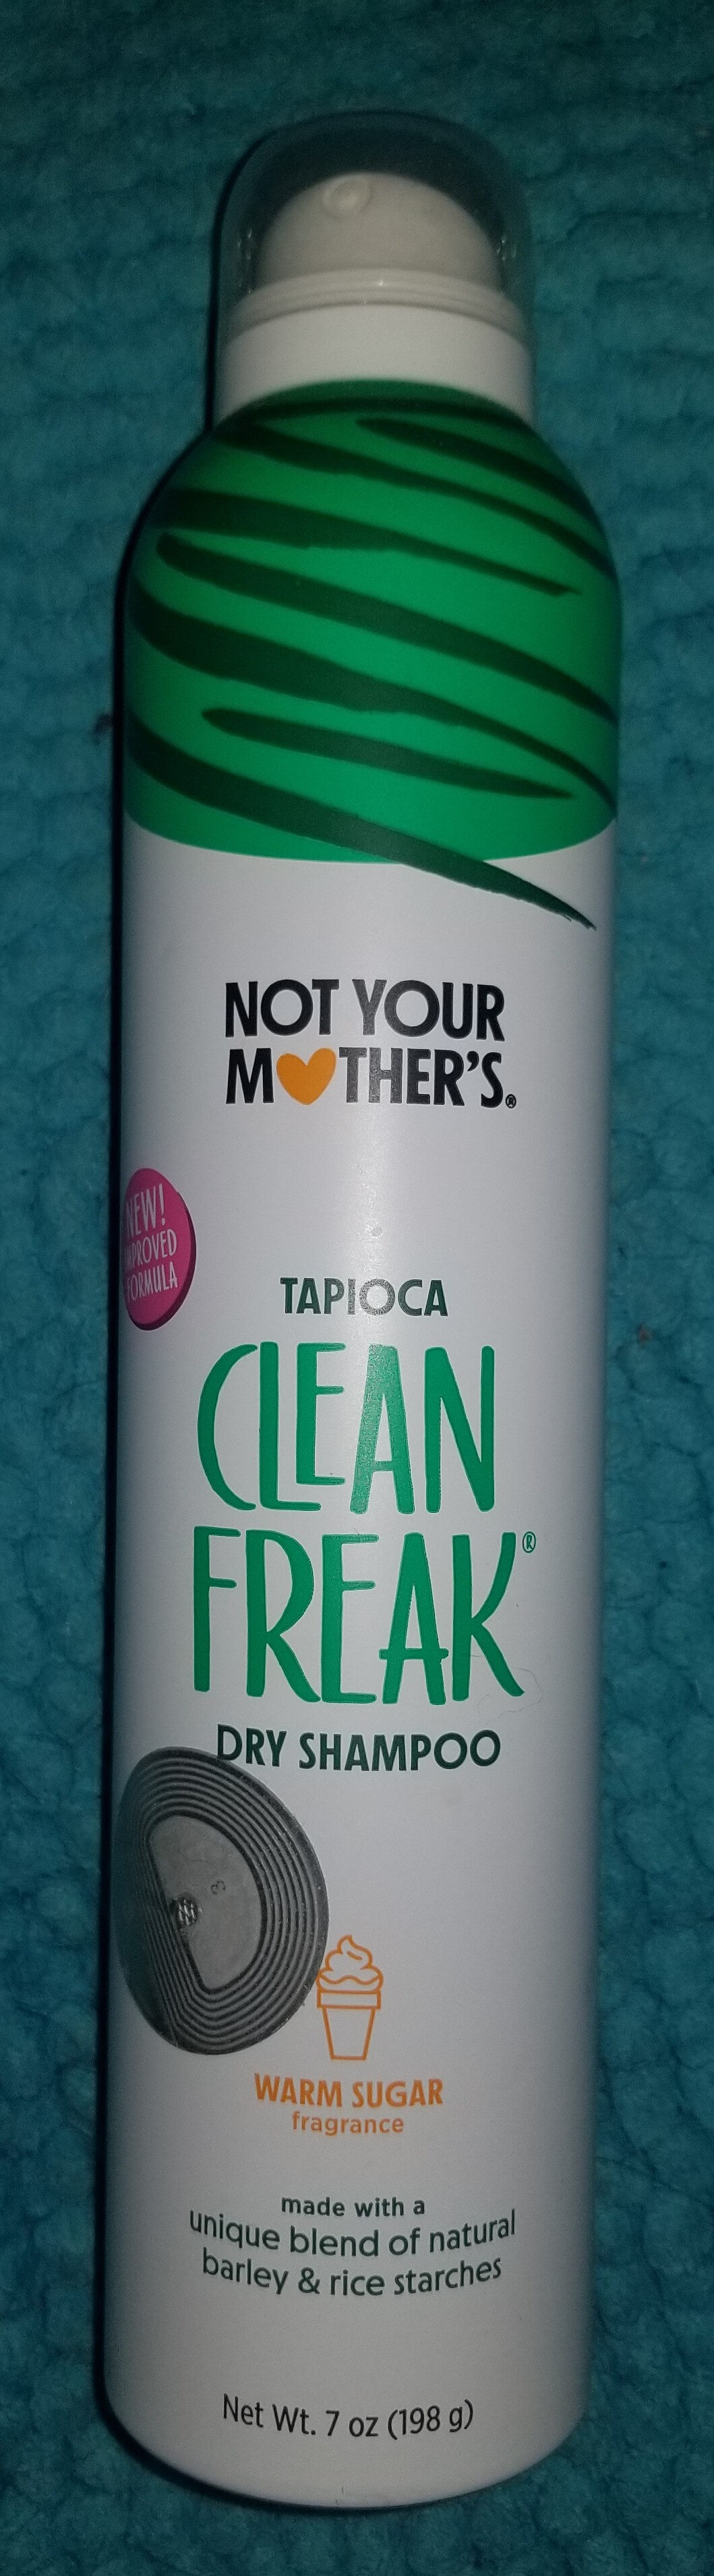 Clean Freak Tapioca Dry Shampoo - Produkto - en